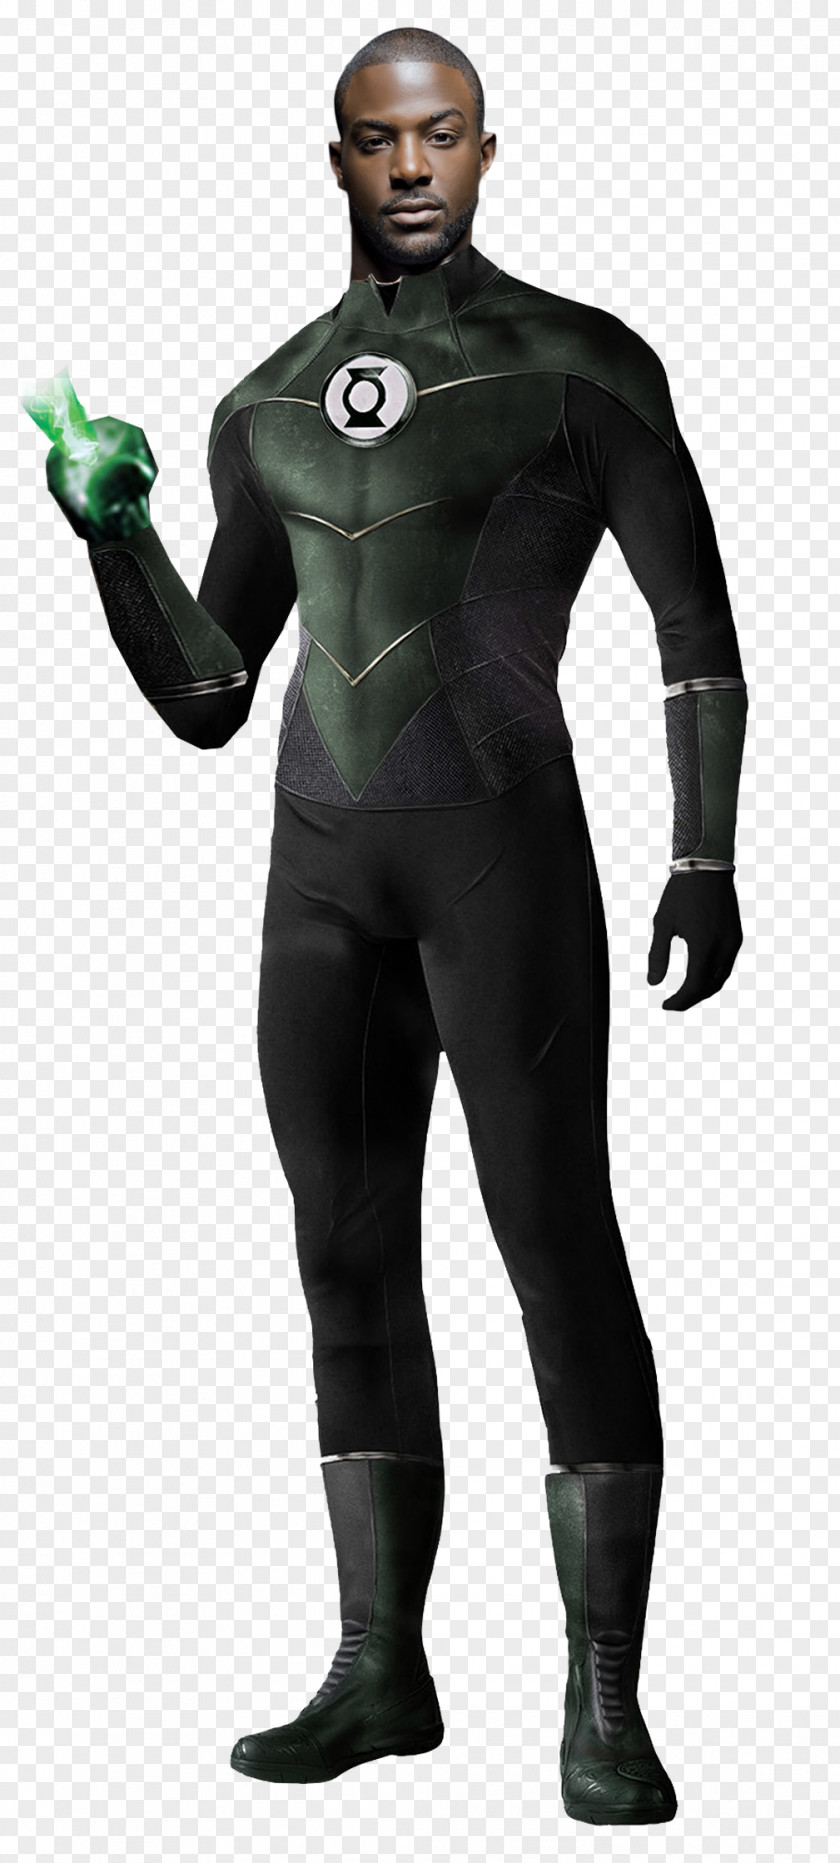 Green Lantern Cyborg Justice League Roy Harper Deadshot Black Canary PNG